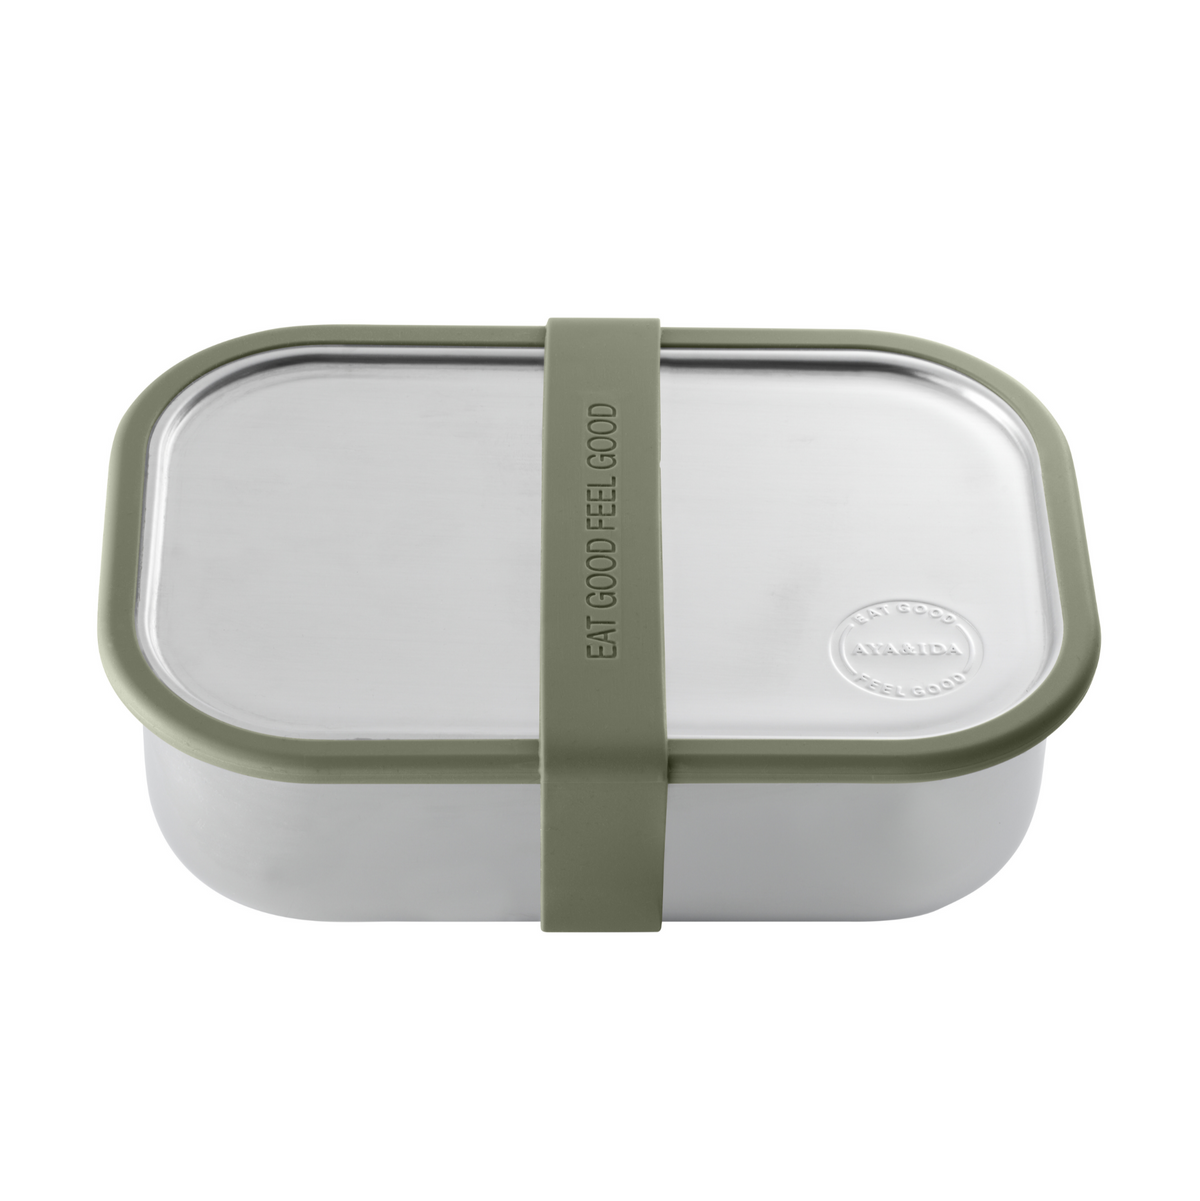 Lunch Box - Tropical Green - 1000ML